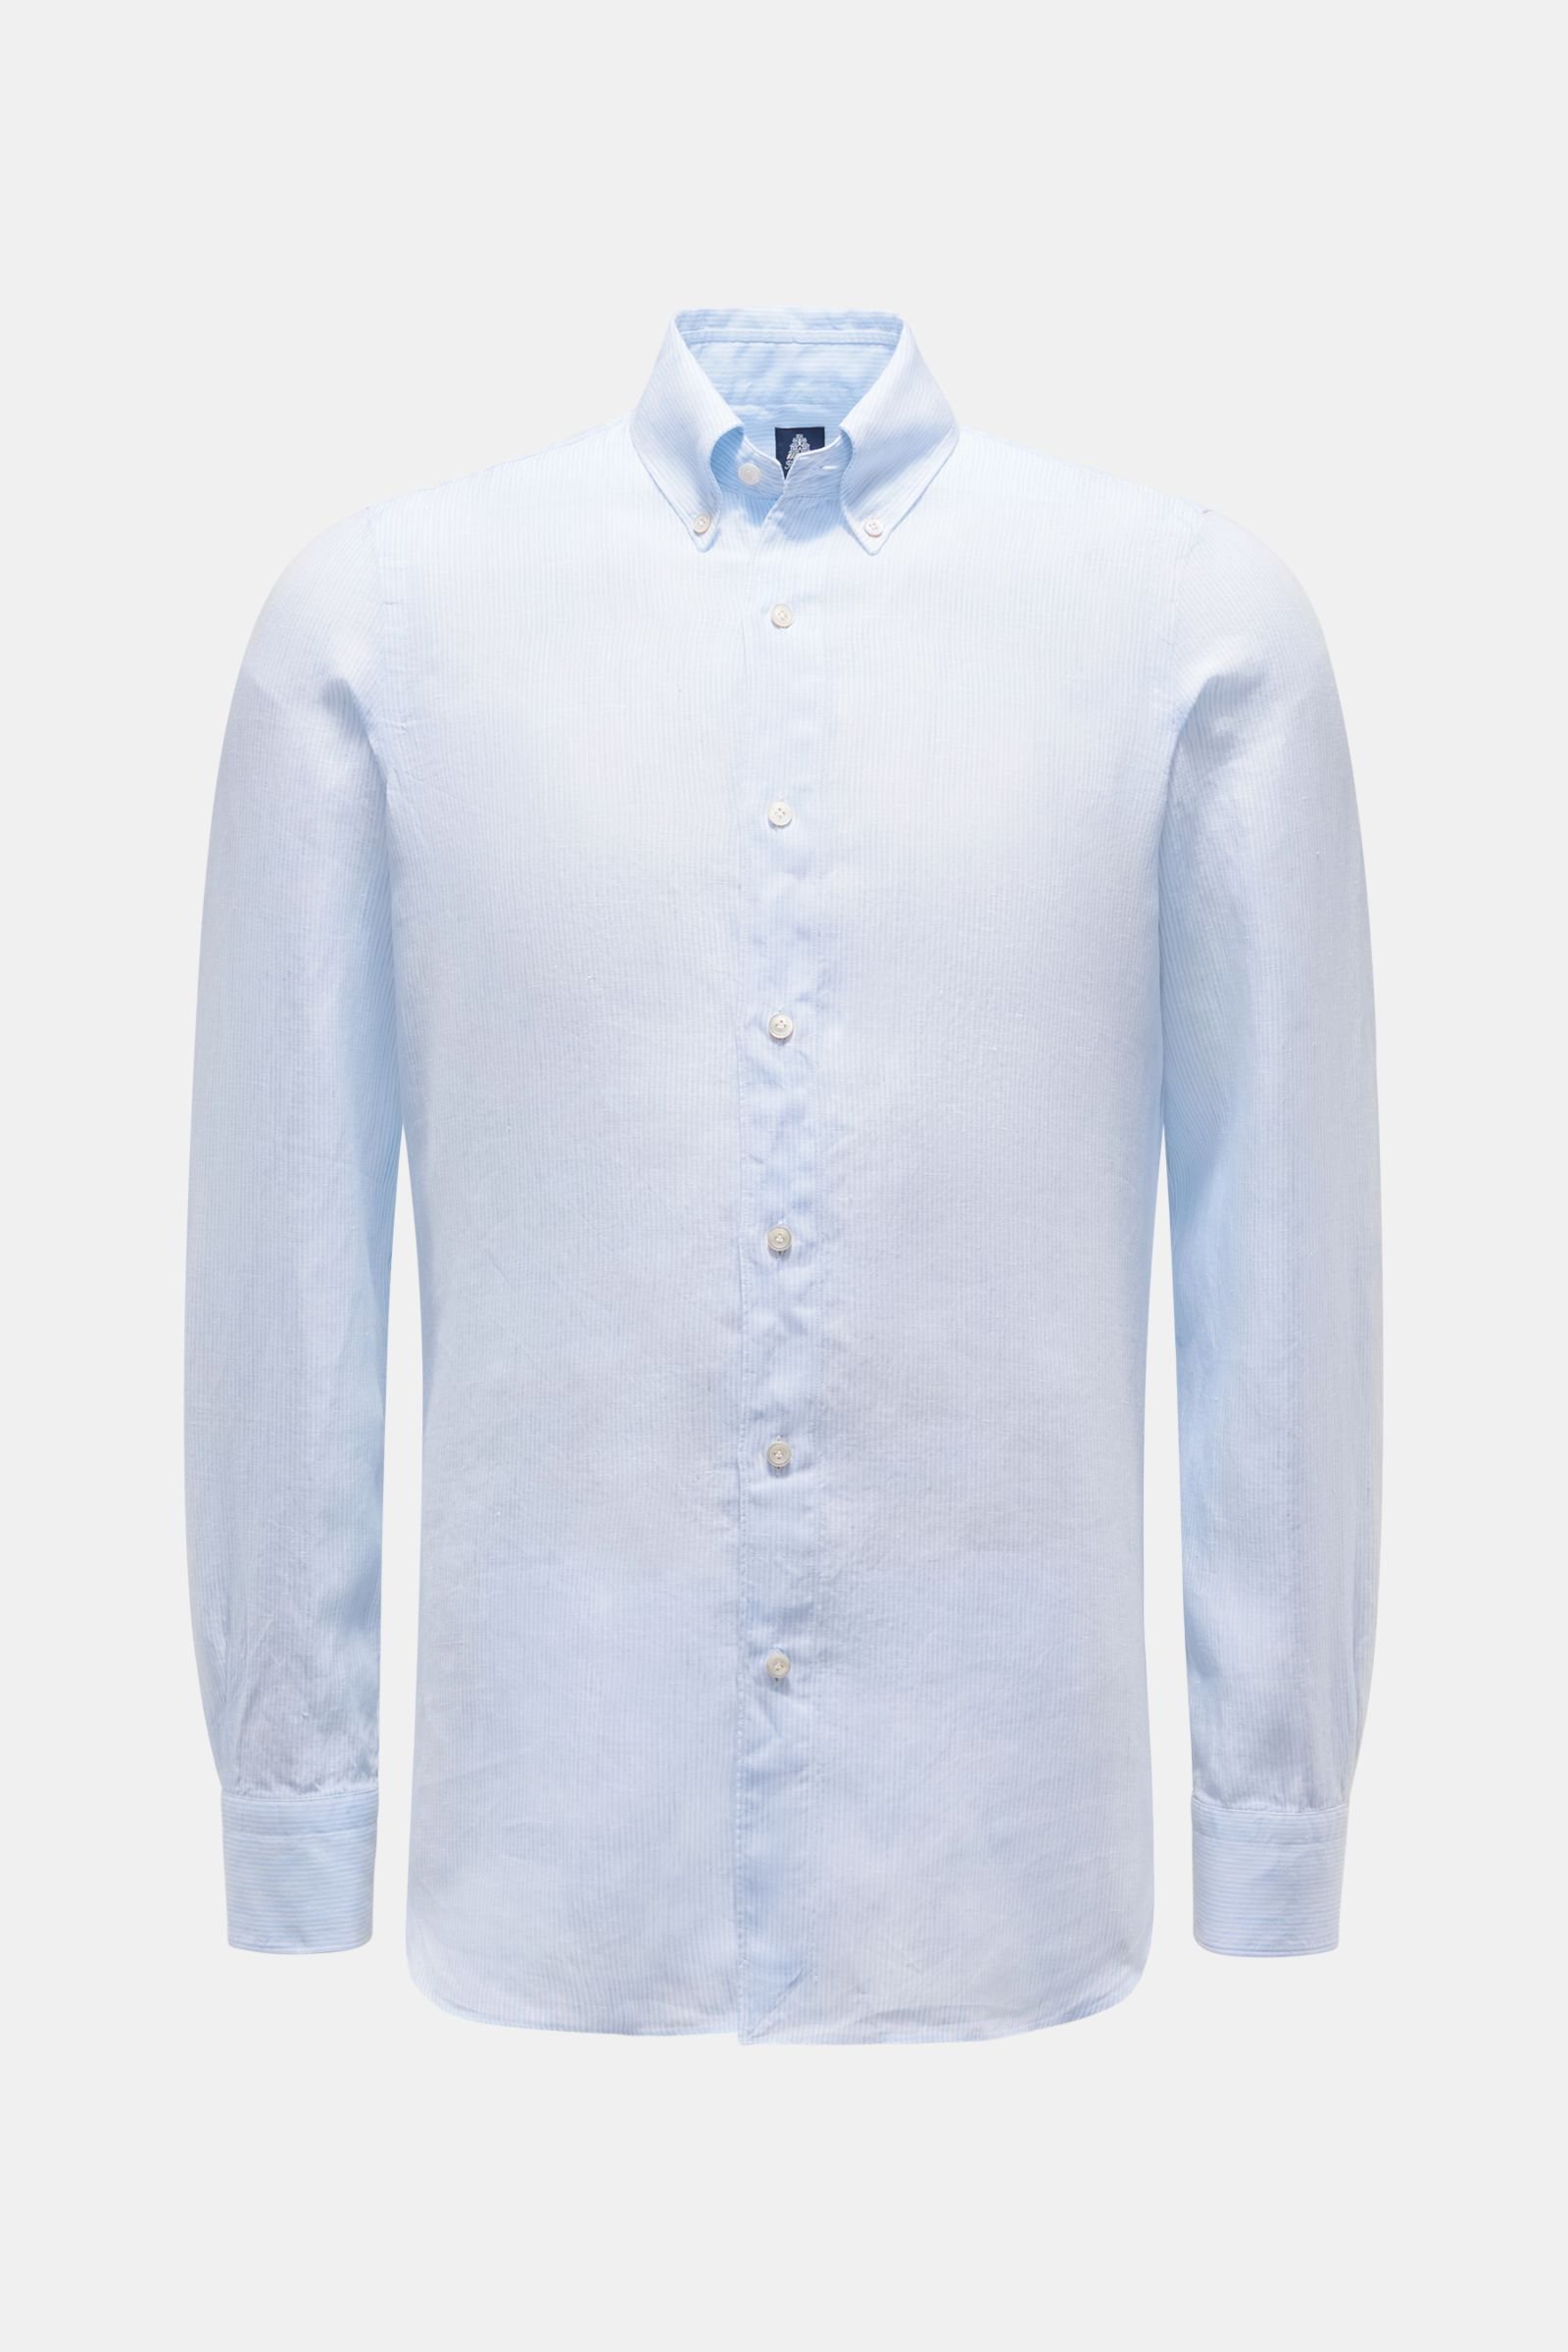 Linen shirt 'Leonardo Gaeta' button-down collar light blue/white striped